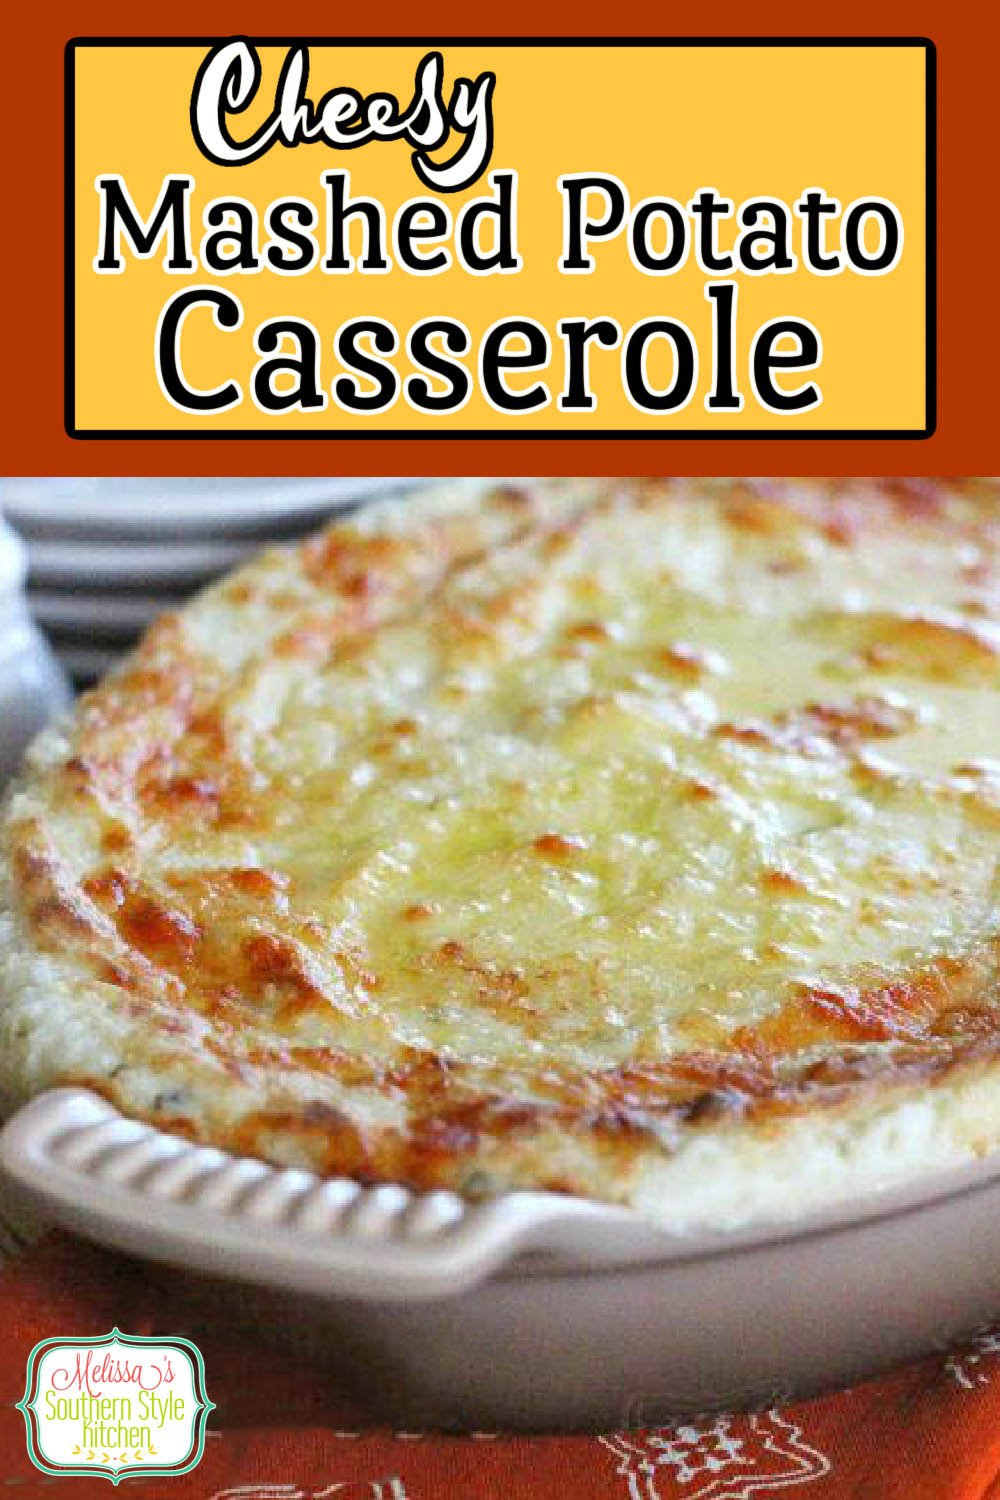 This Cheesy Mashed Potato Casserole is the perfect side dish for any meal #mashedpotatoes #cheesypotatoes #potatocasserole #potatocasserolerecipes #southernrecipes #bakedmashedpotatoes #makeaheadpotatoes via @melissasssk